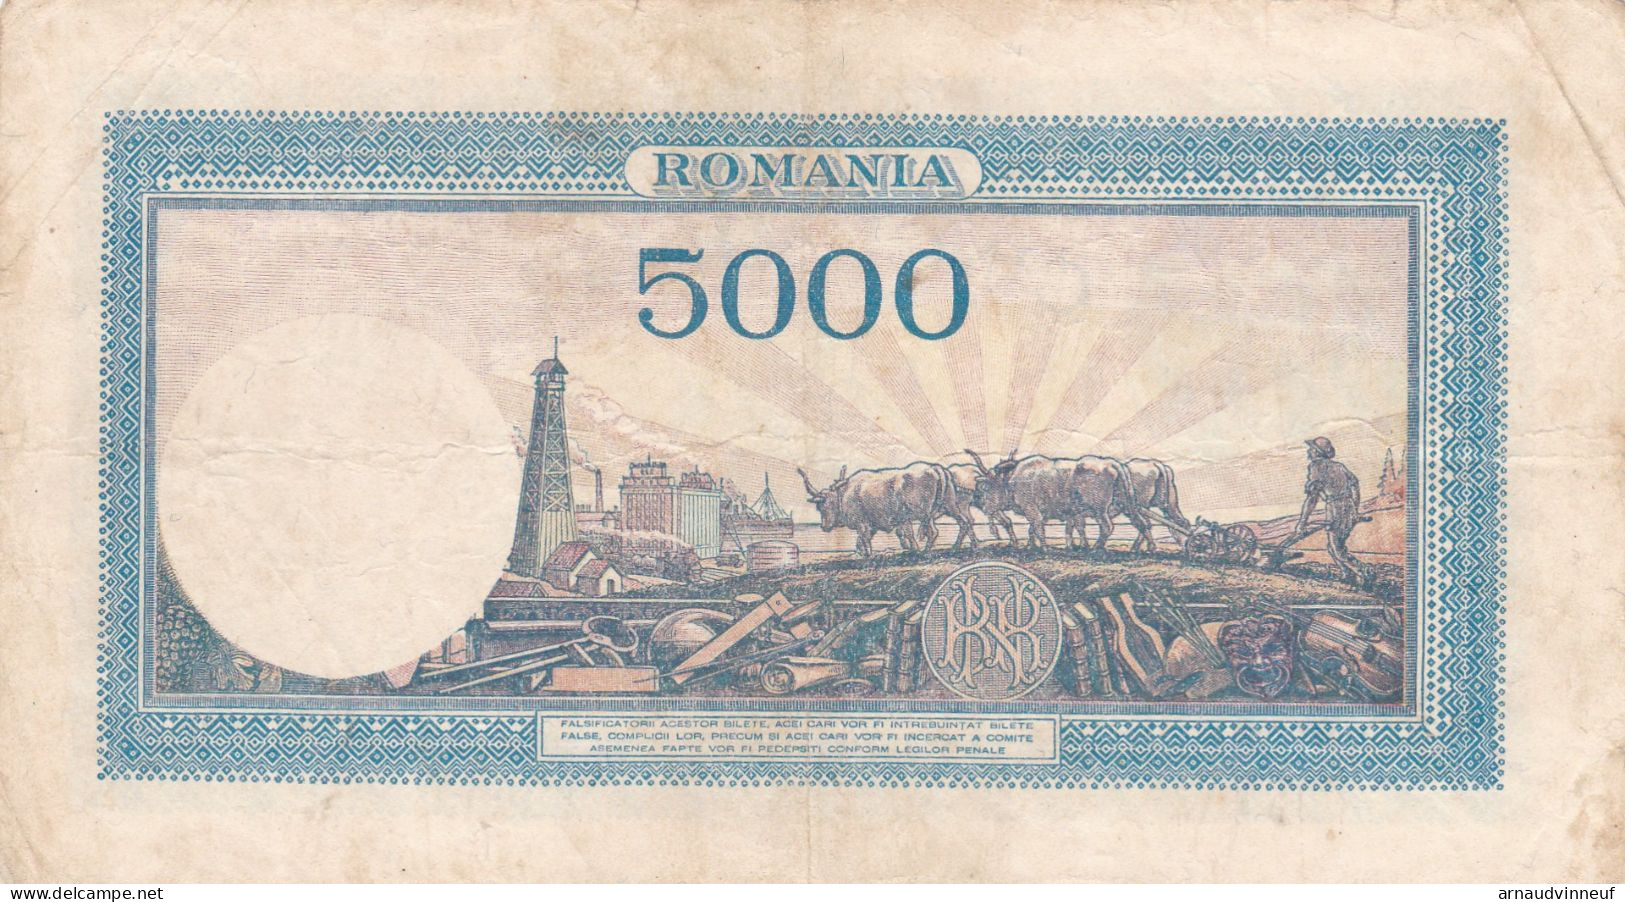 ROMANIA 5000 1944 - Romania